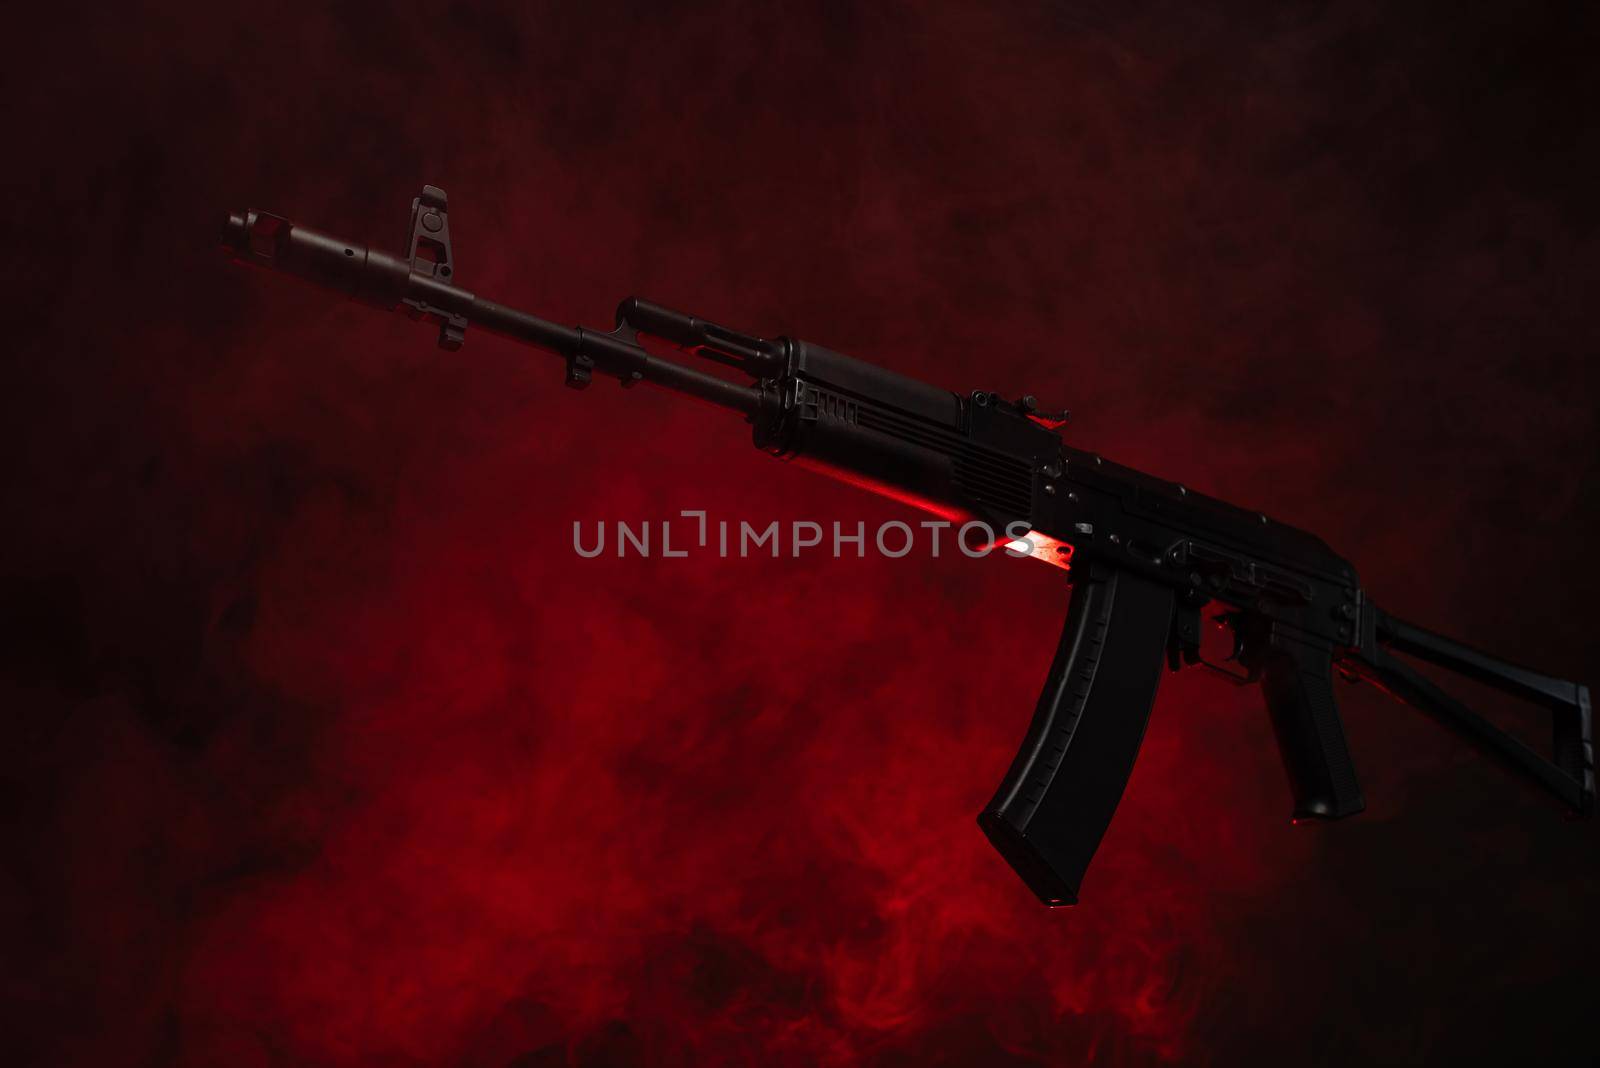 the kalashnikov assault rifle in smoke